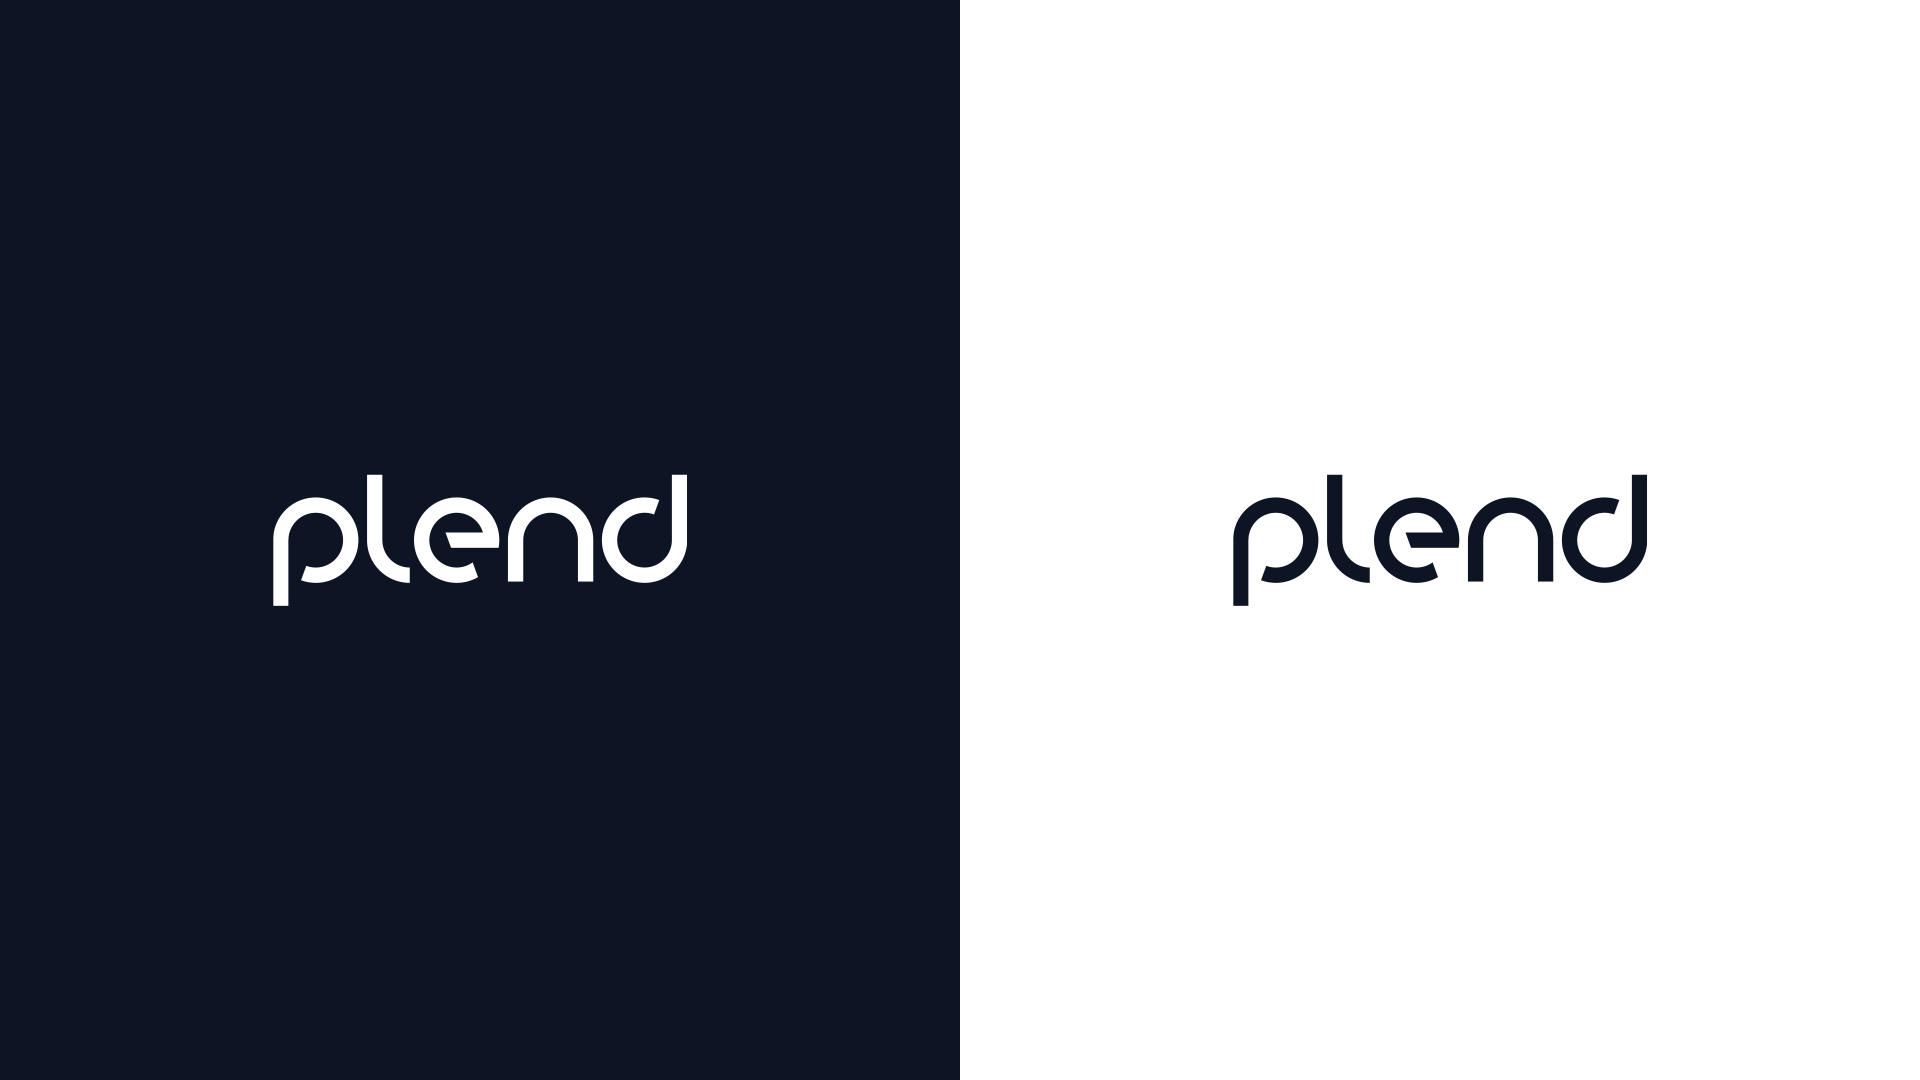 Plend_Web_01.png